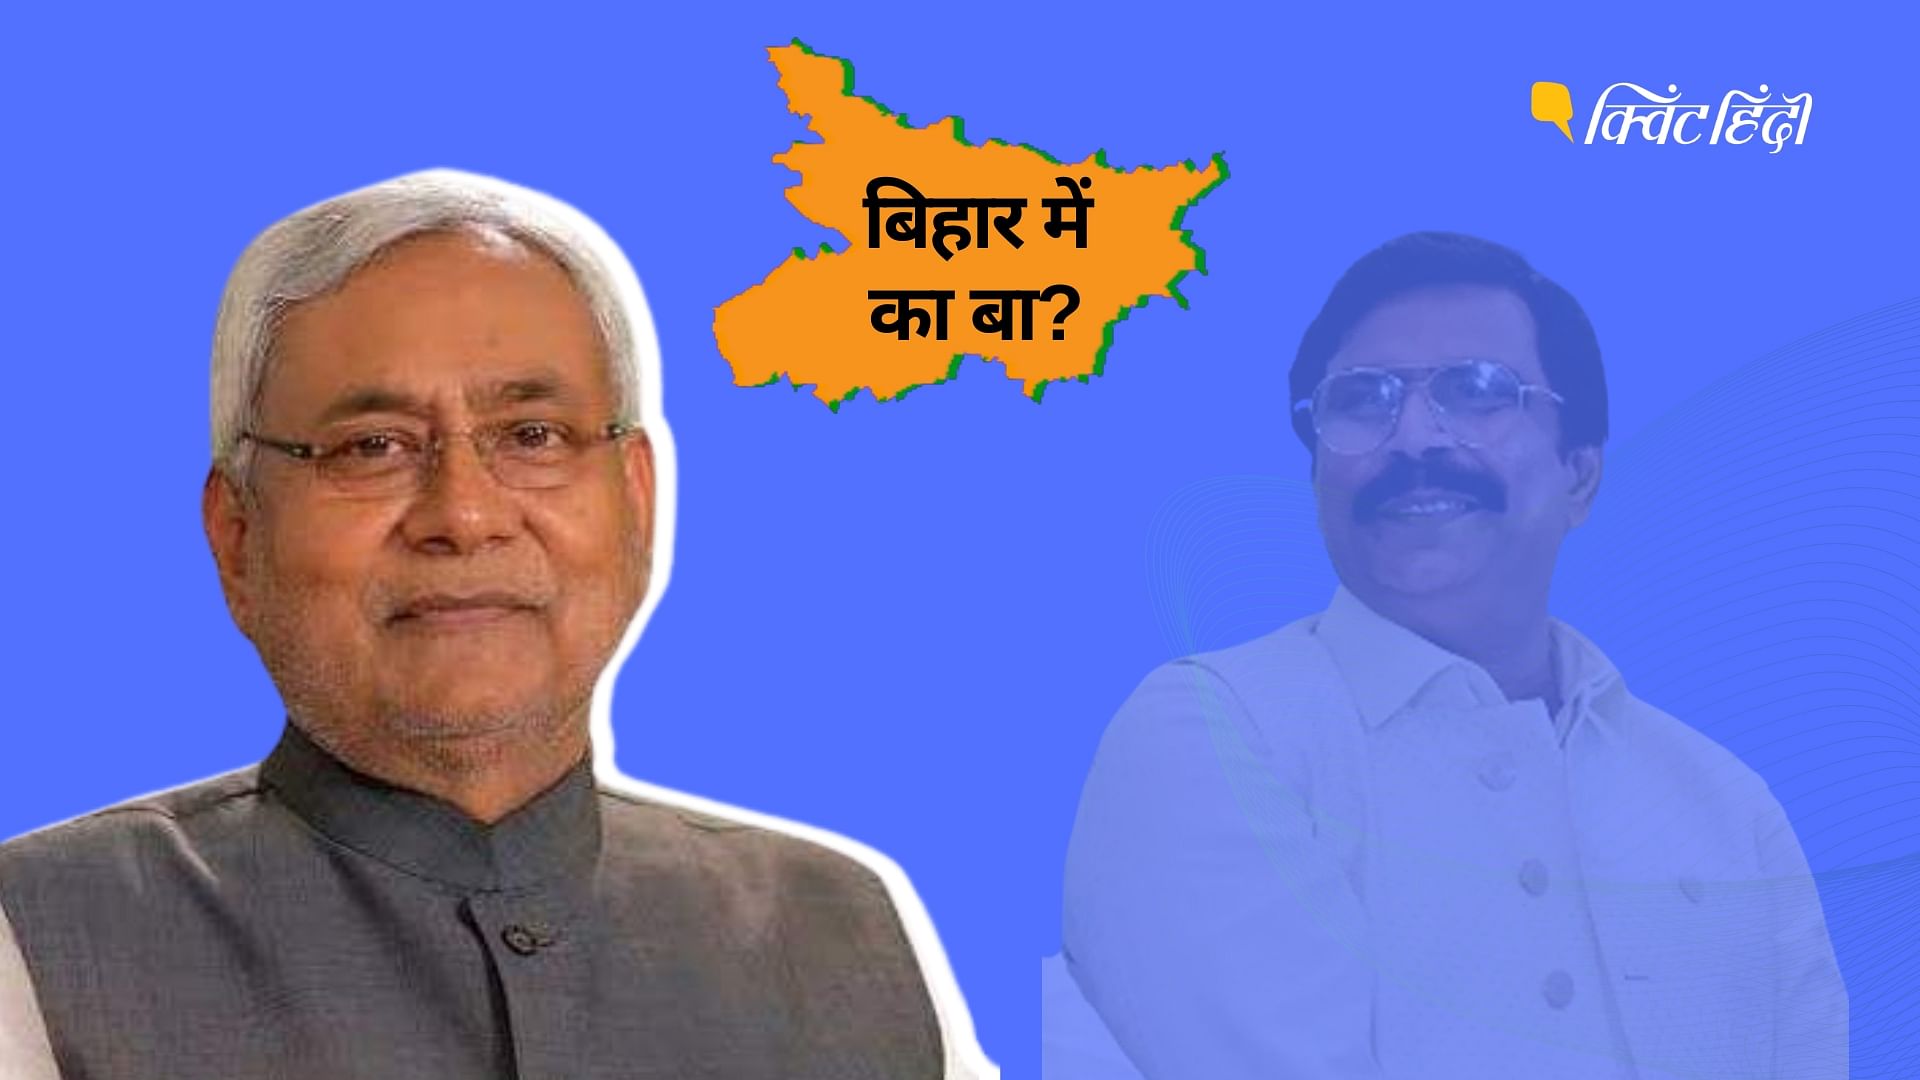 <div class="paragraphs"><p>Bihar Upper Caste Politics: बिहार में 2015-2023 तक कैसे बदली फॉरवर्ड पॉलिटिक्स?</p></div>